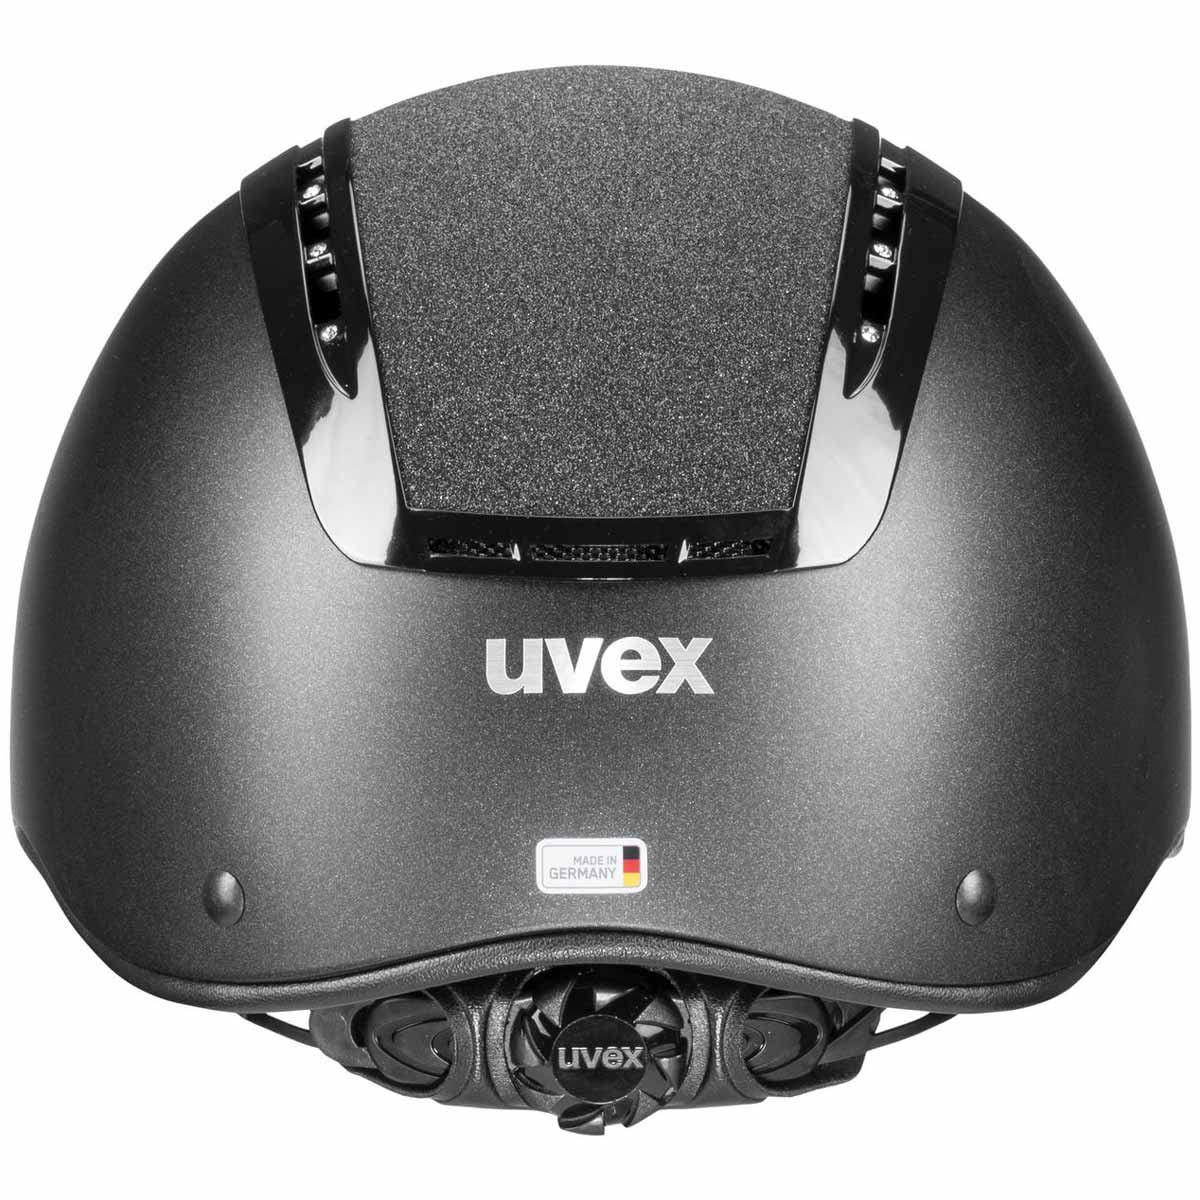 uvex suxxeed starshine riding helmet black S